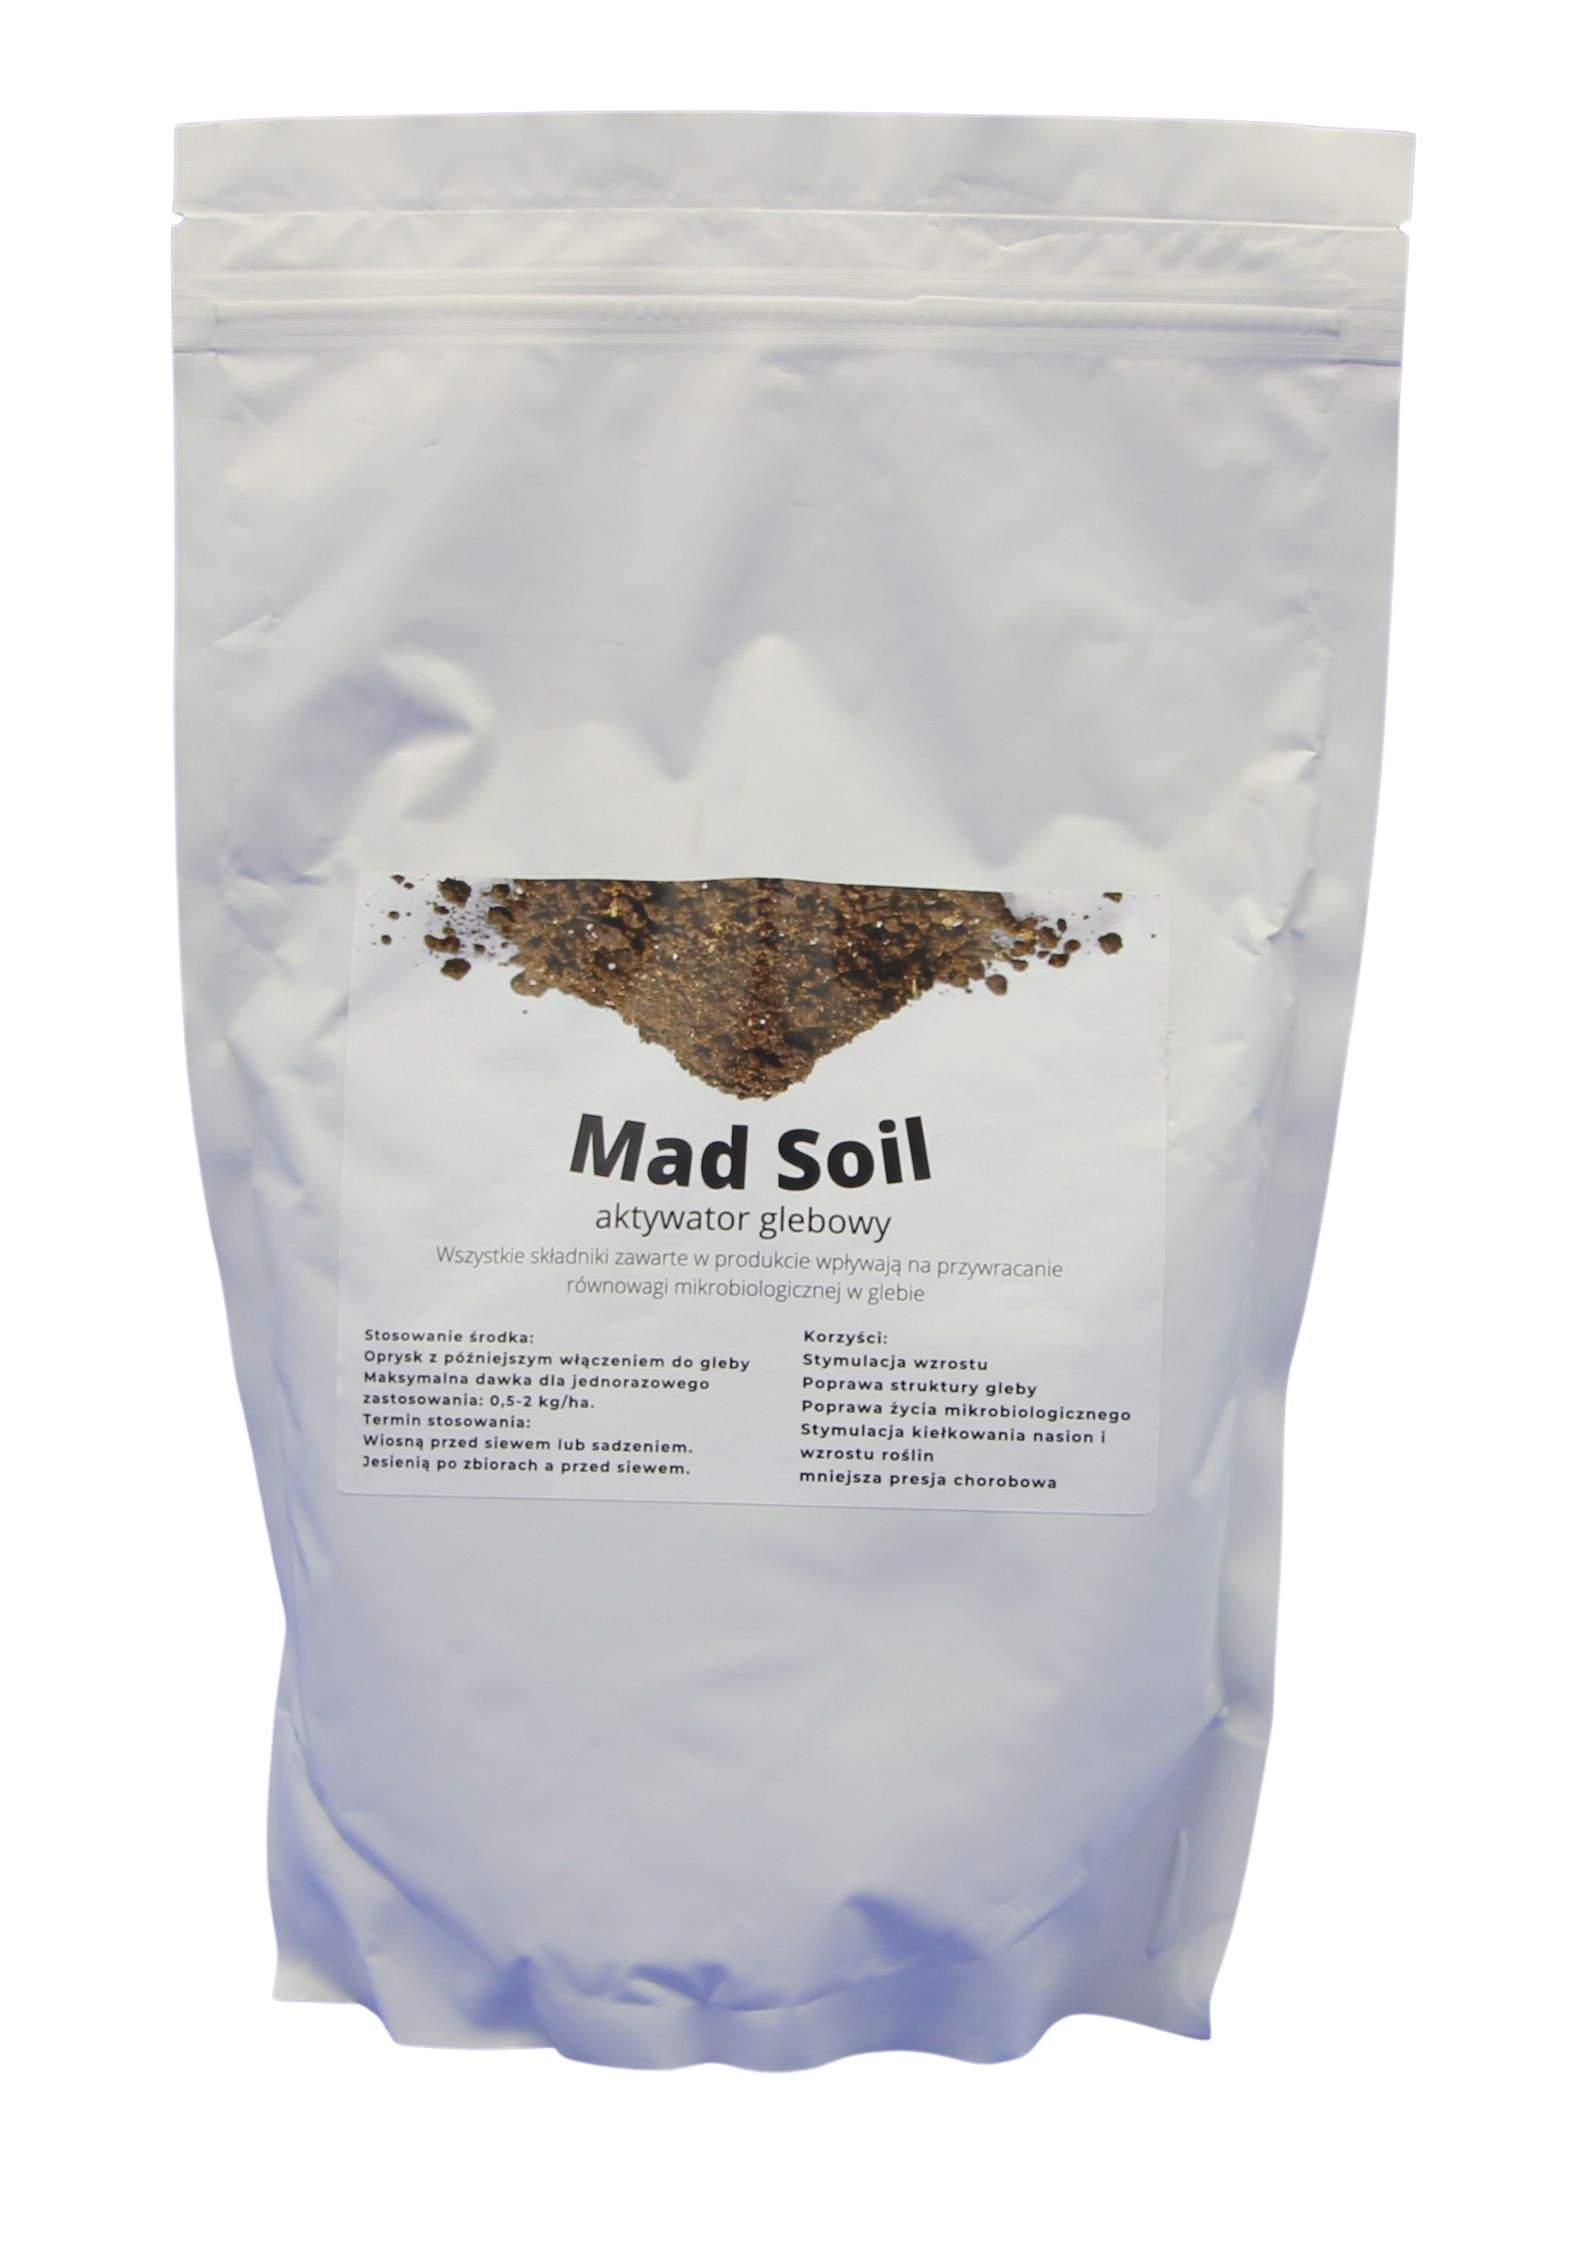 Mad Soil-aktywator glebowy